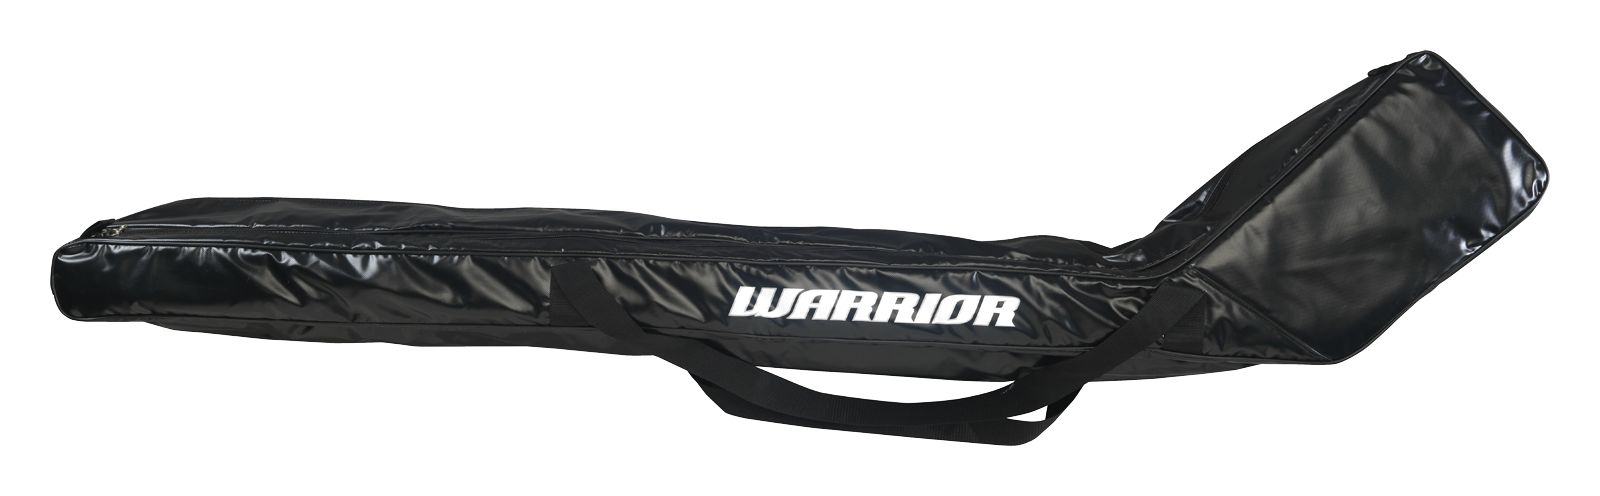 Warrior Team Stick Bag, Black with White image number 0